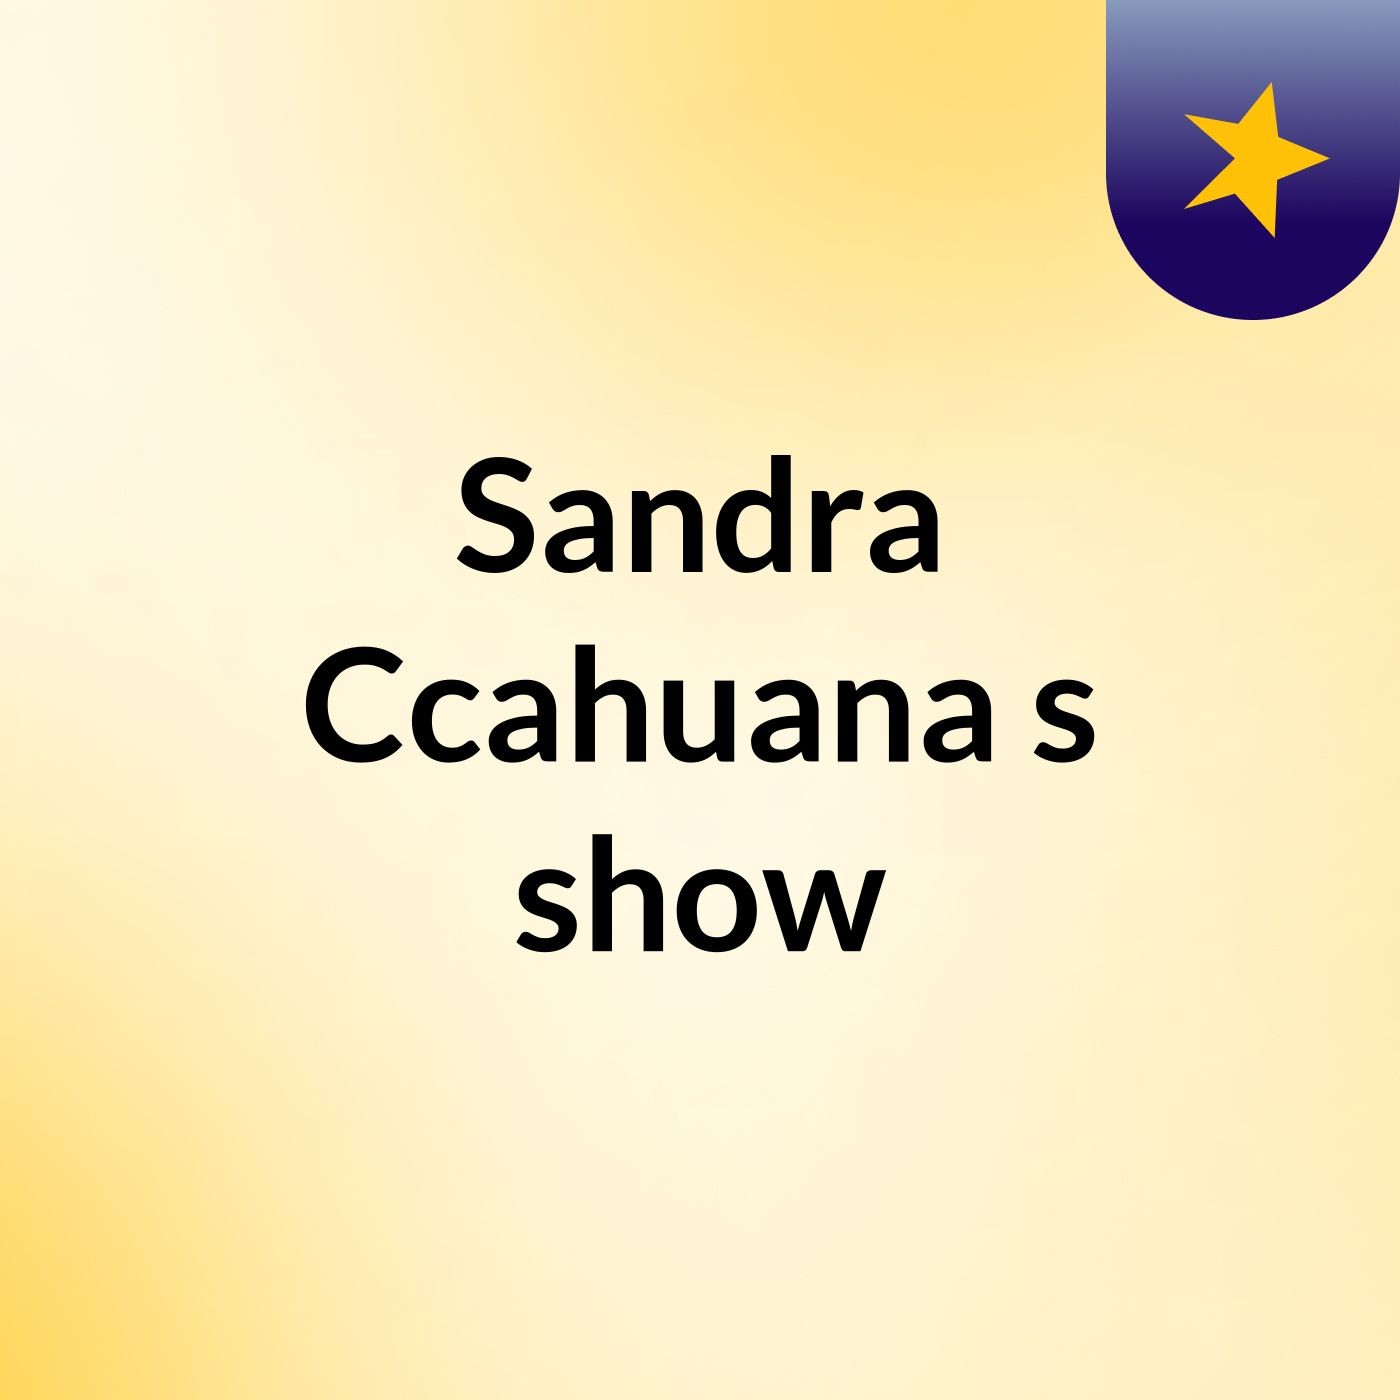 Sandra Ccahuana's show